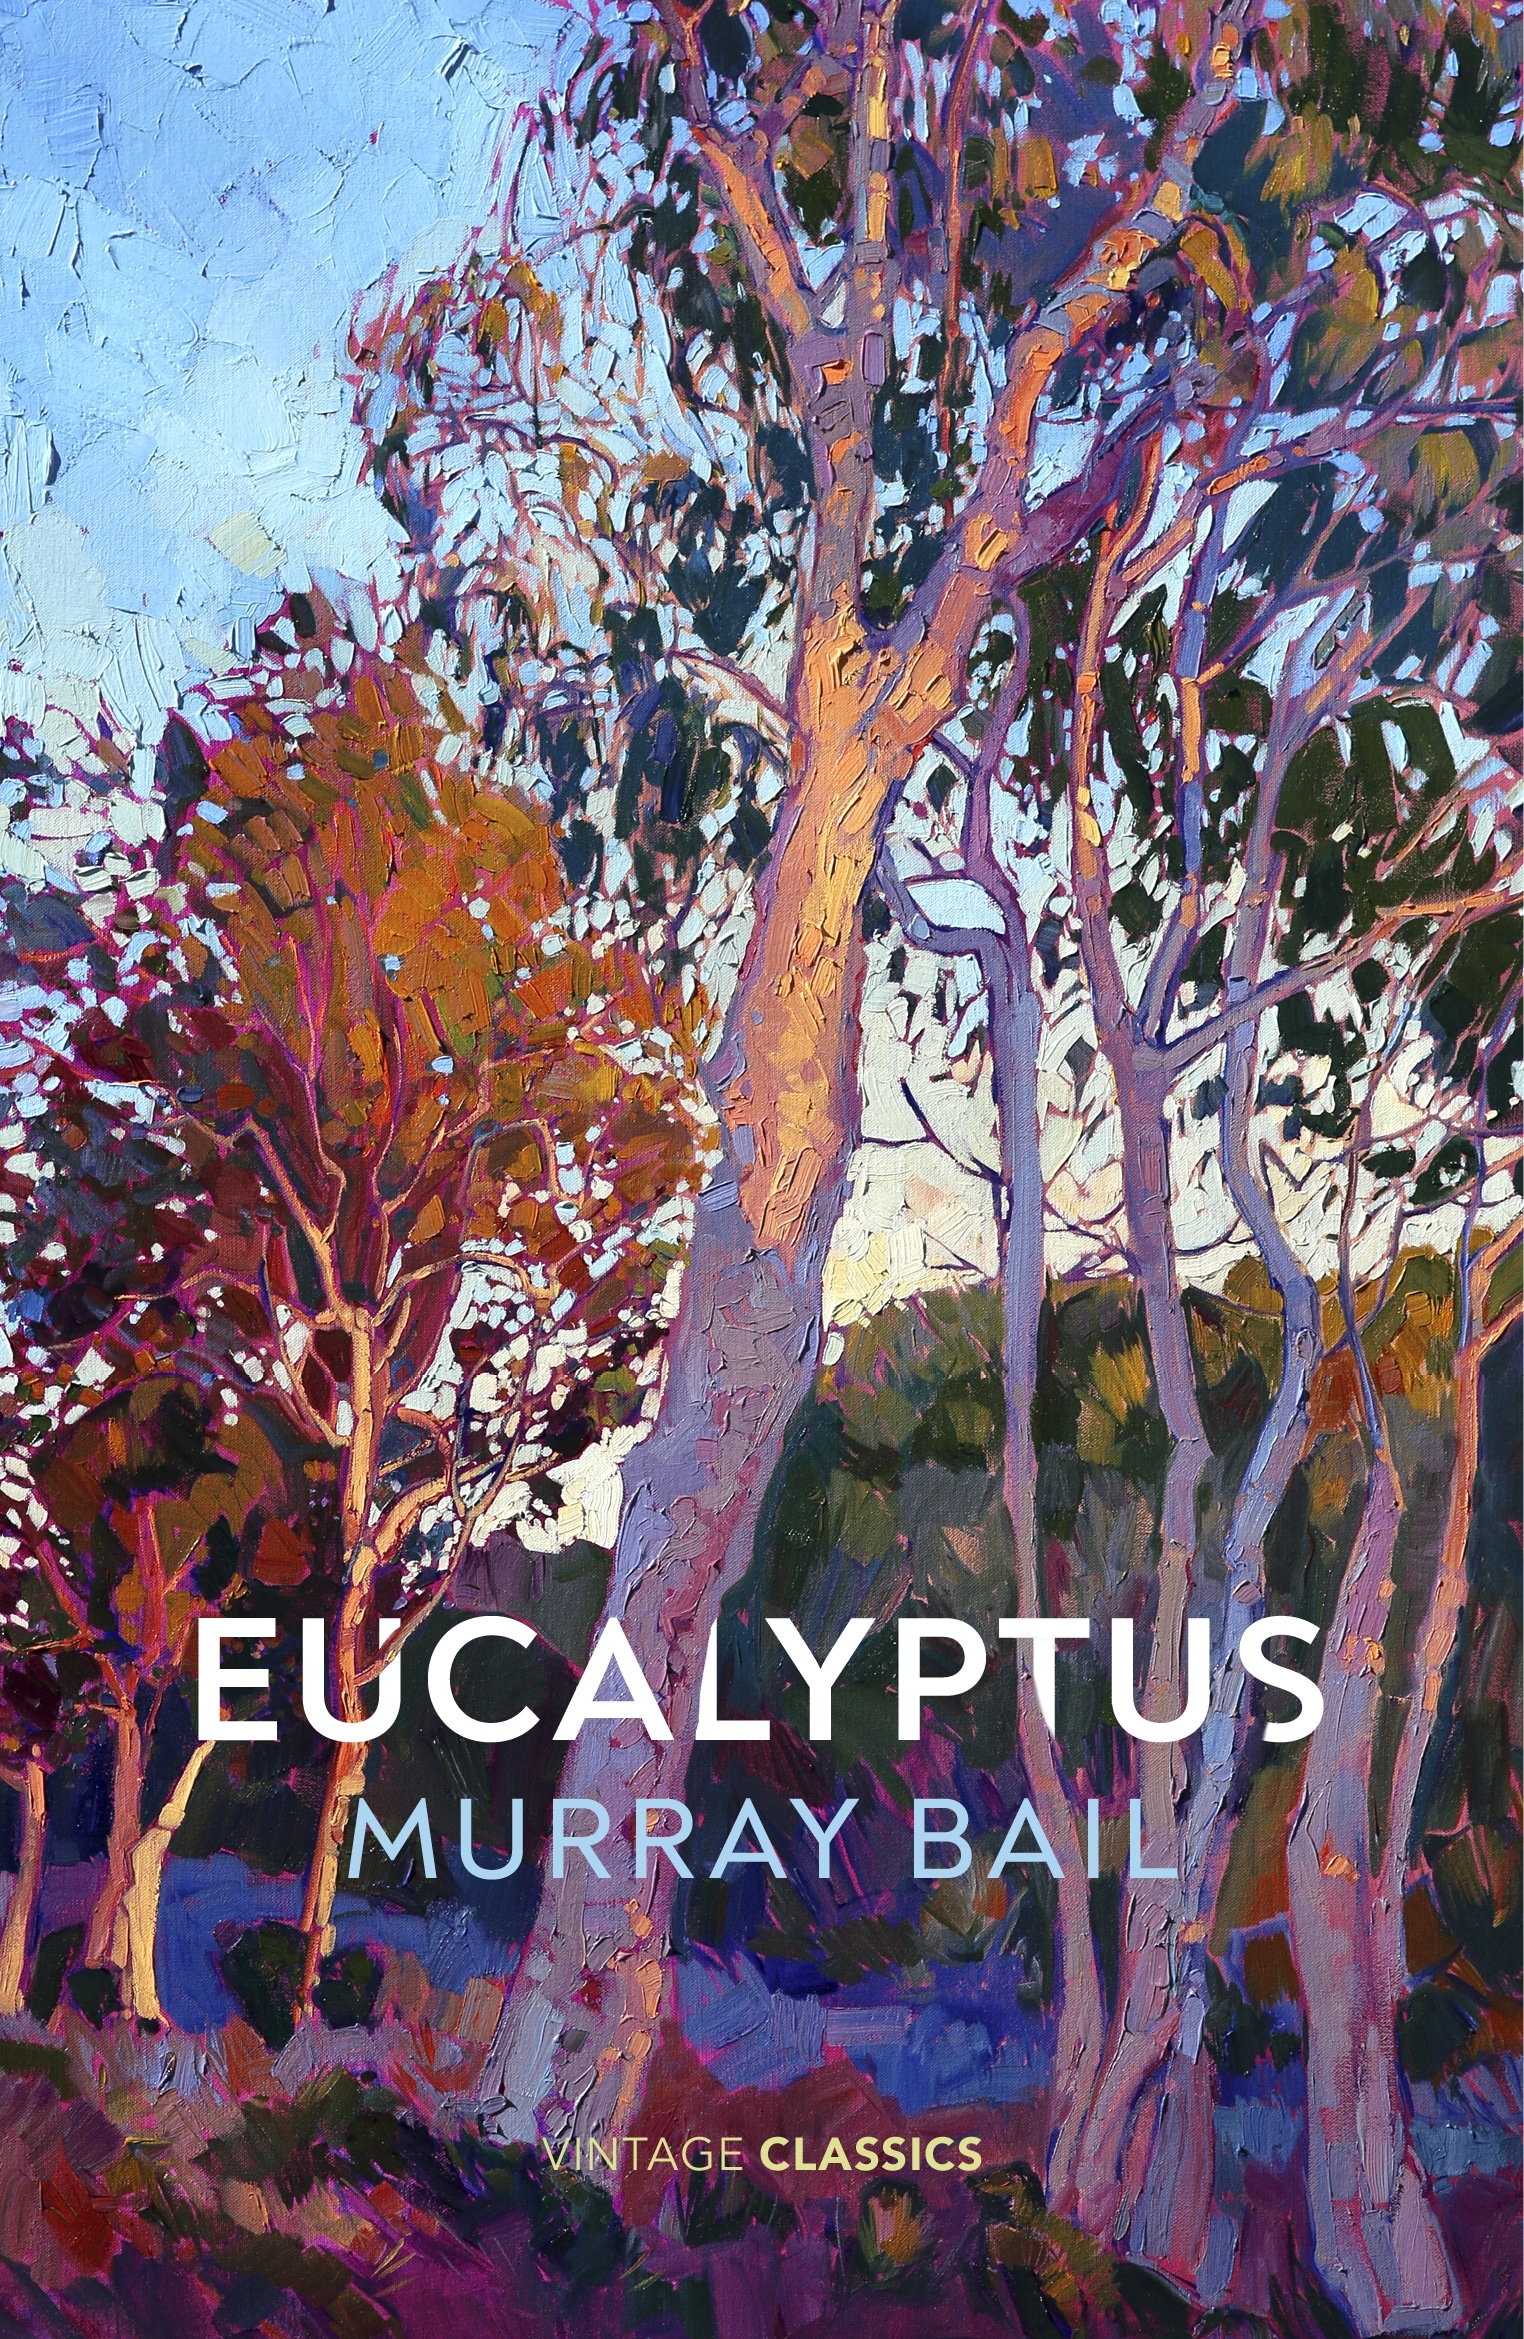 Book “Eucalyptus” by Murray Bail — July 1, 2021